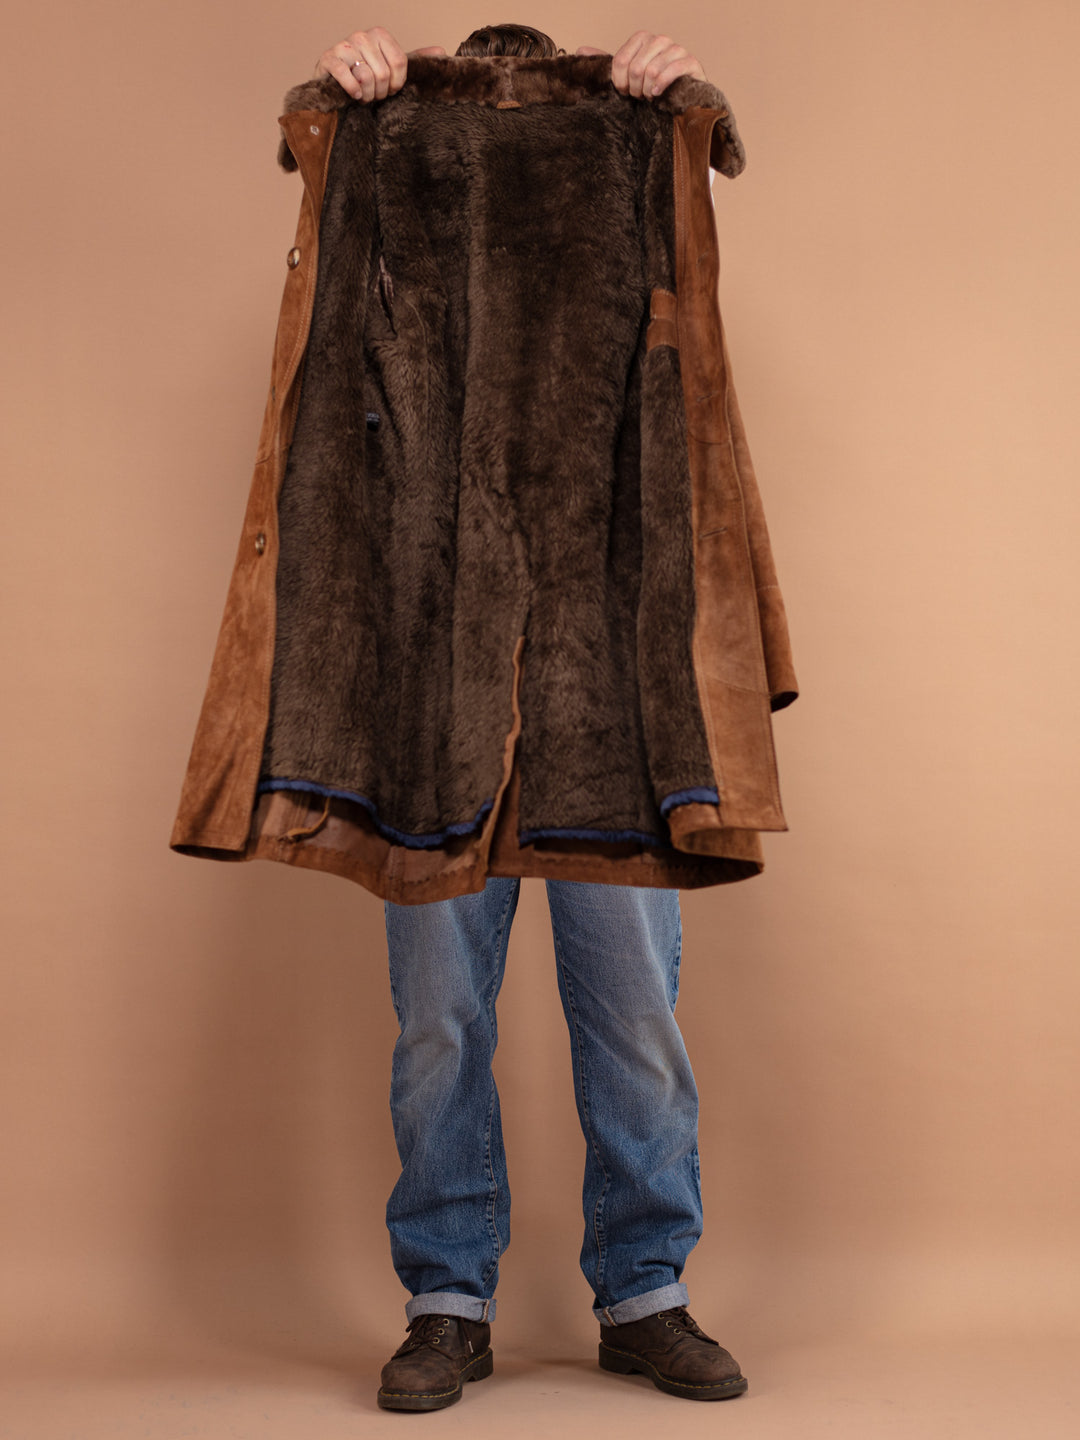 Belted Suede Coat 70's, Size Large L Vintage Men Suede Coat, Western Cowboy Coat, Retro Winter Sherpa Coat, Trapper Coat, 70s Outerwear